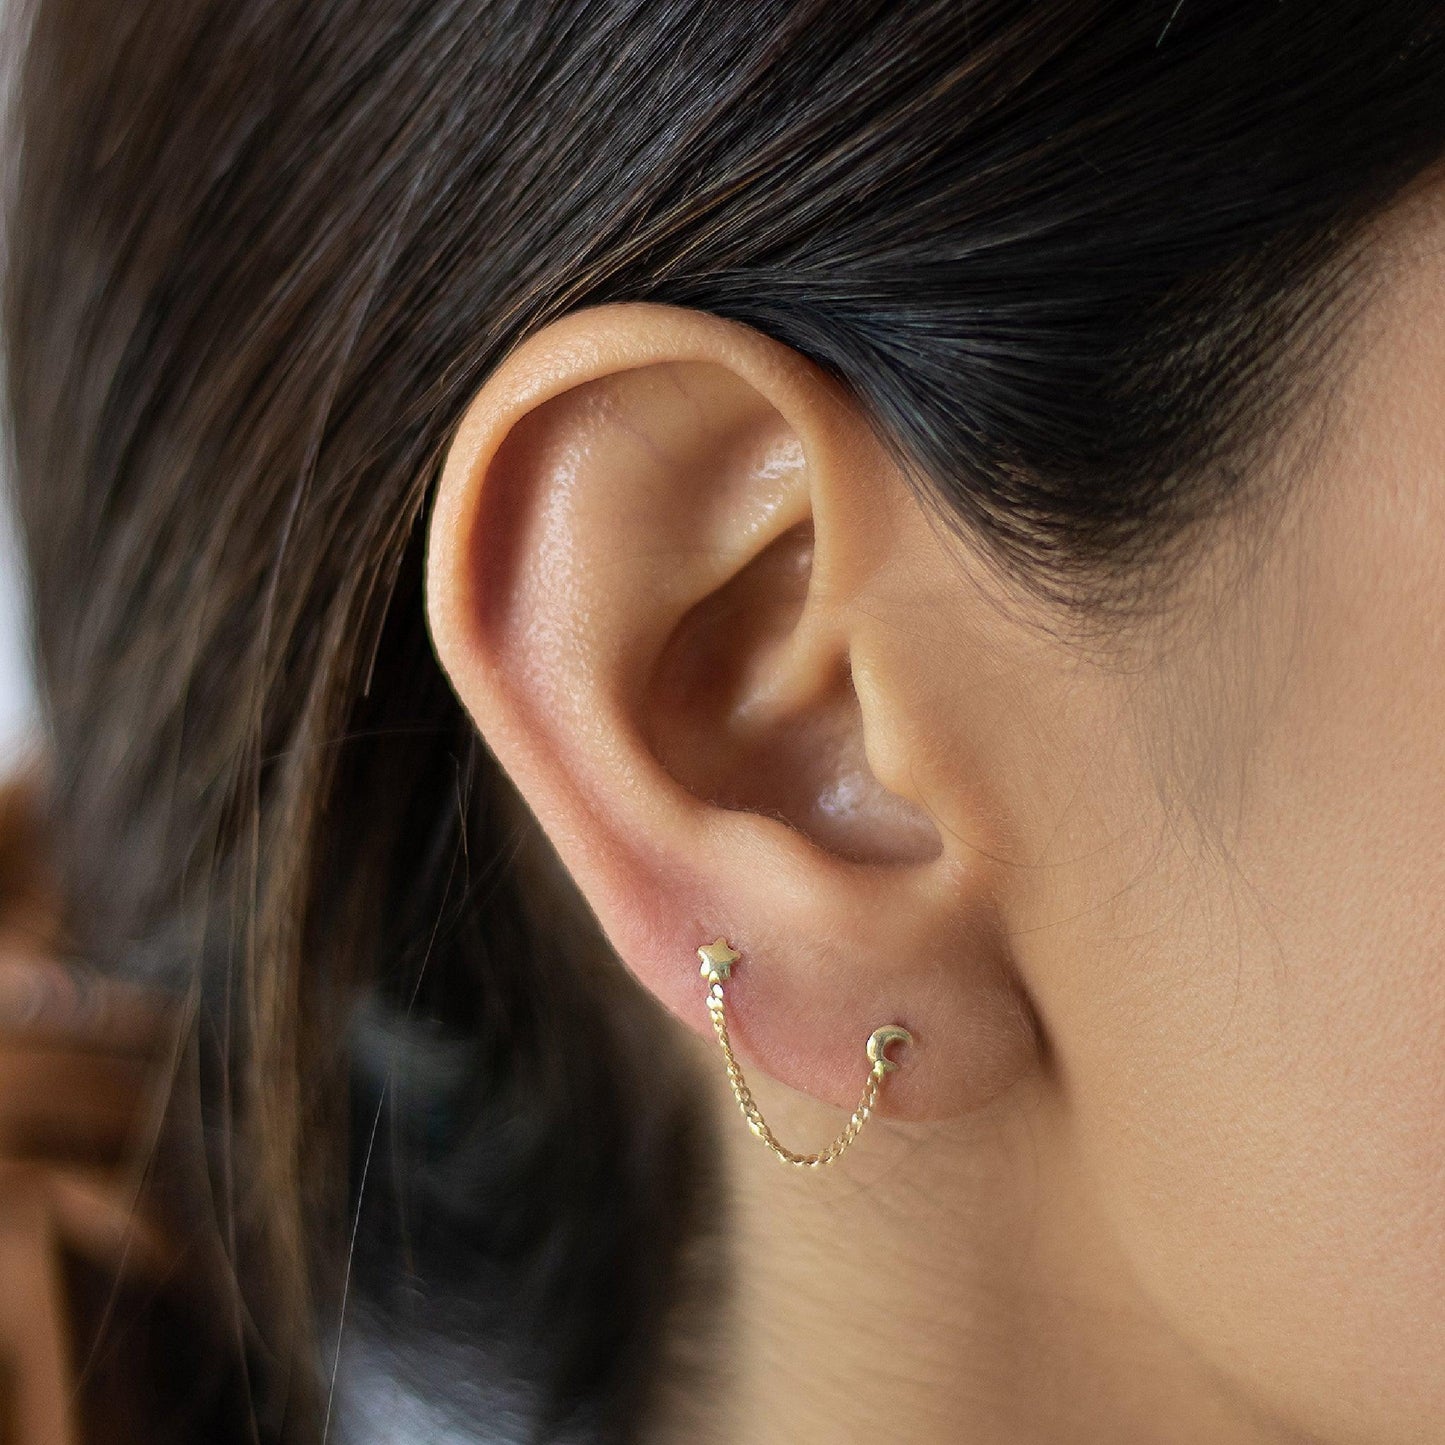 Latest Gold Hoop Earring Designs 2020  Ear Piercing Ideas for  girlsContact details in description  YouTube